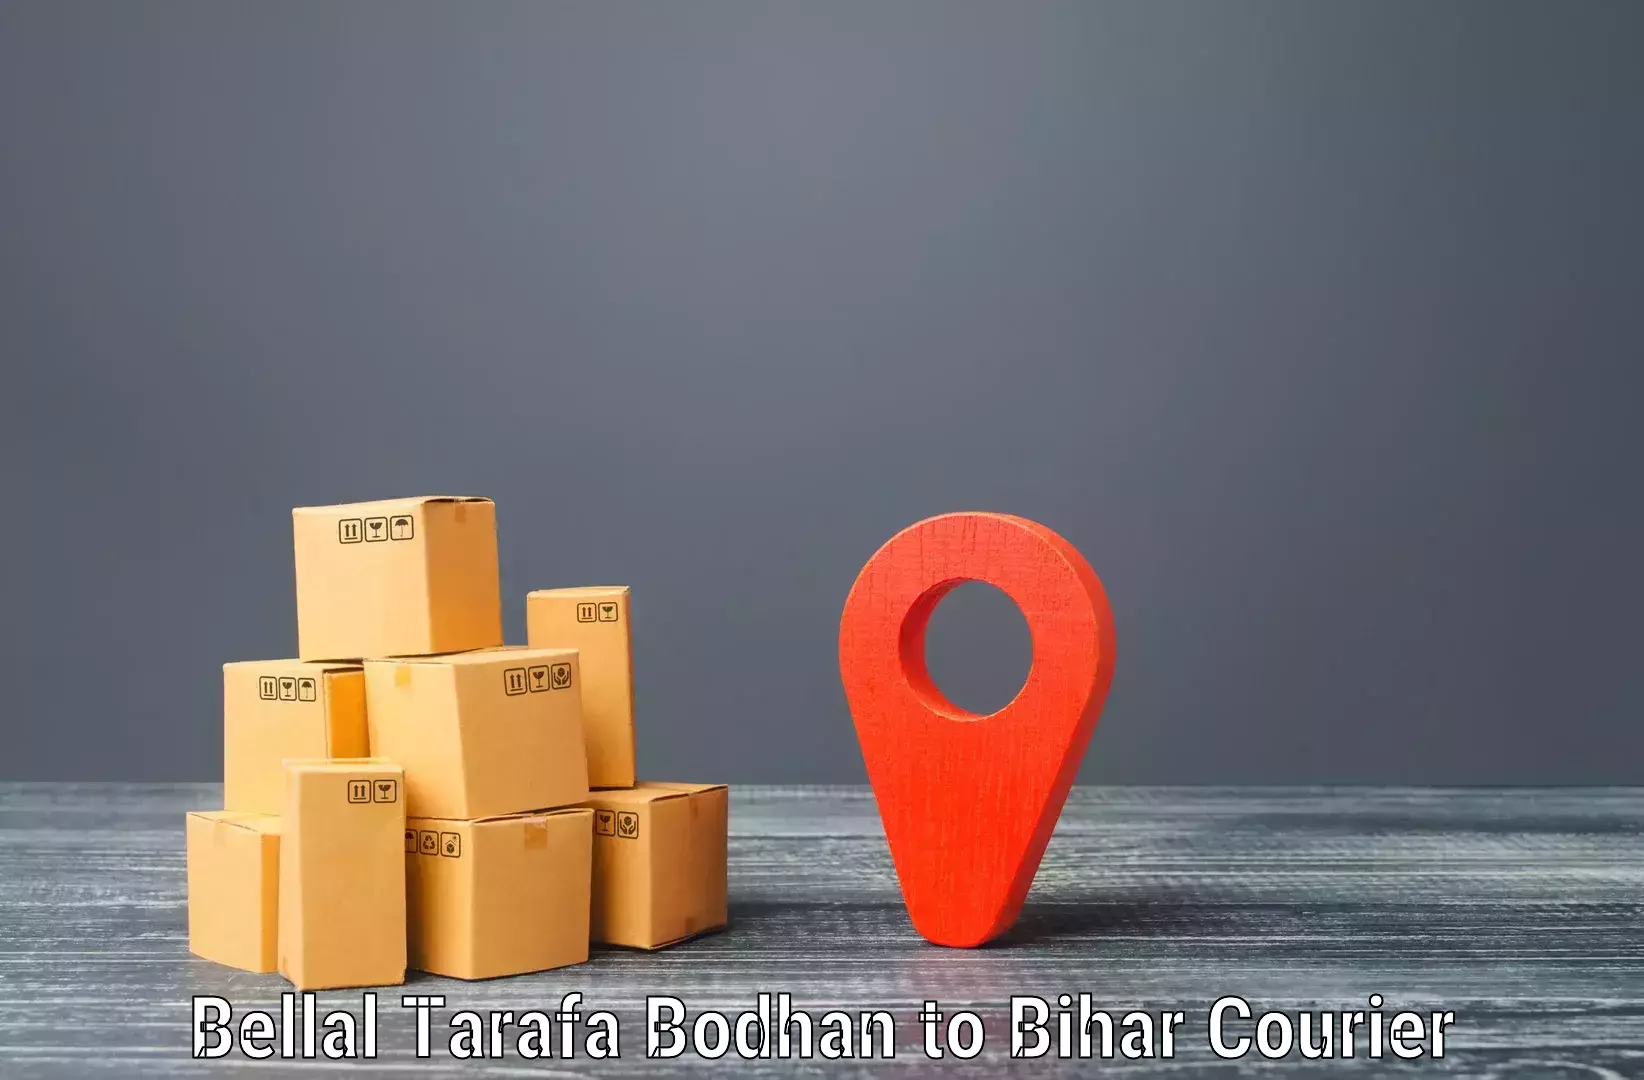 Courier service partnerships Bellal Tarafa Bodhan to Chakai